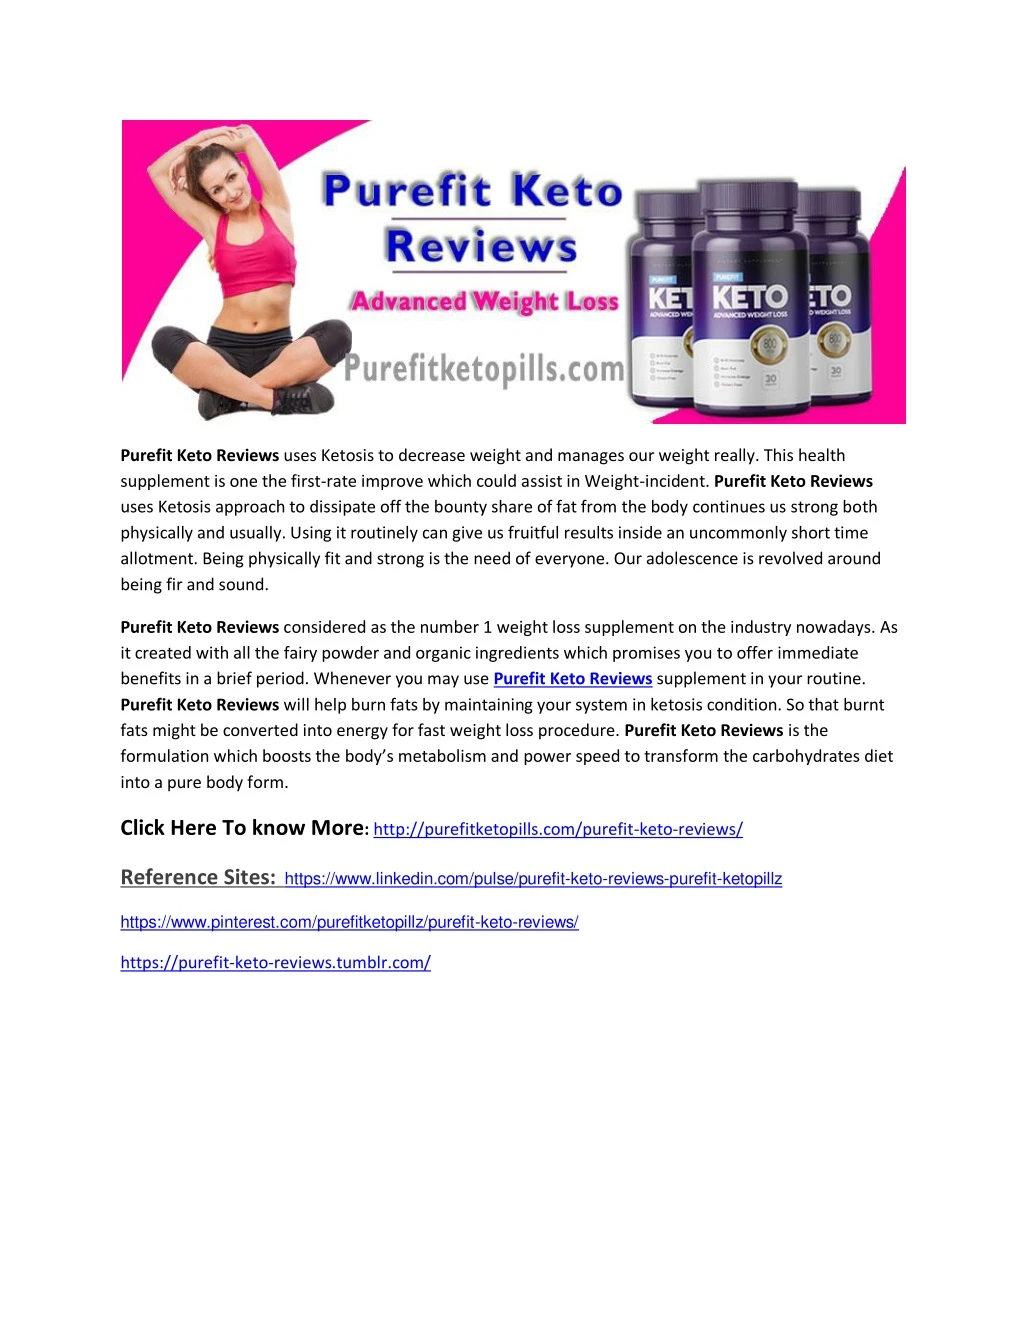 purefit keto reviews uses ketosis to decrease